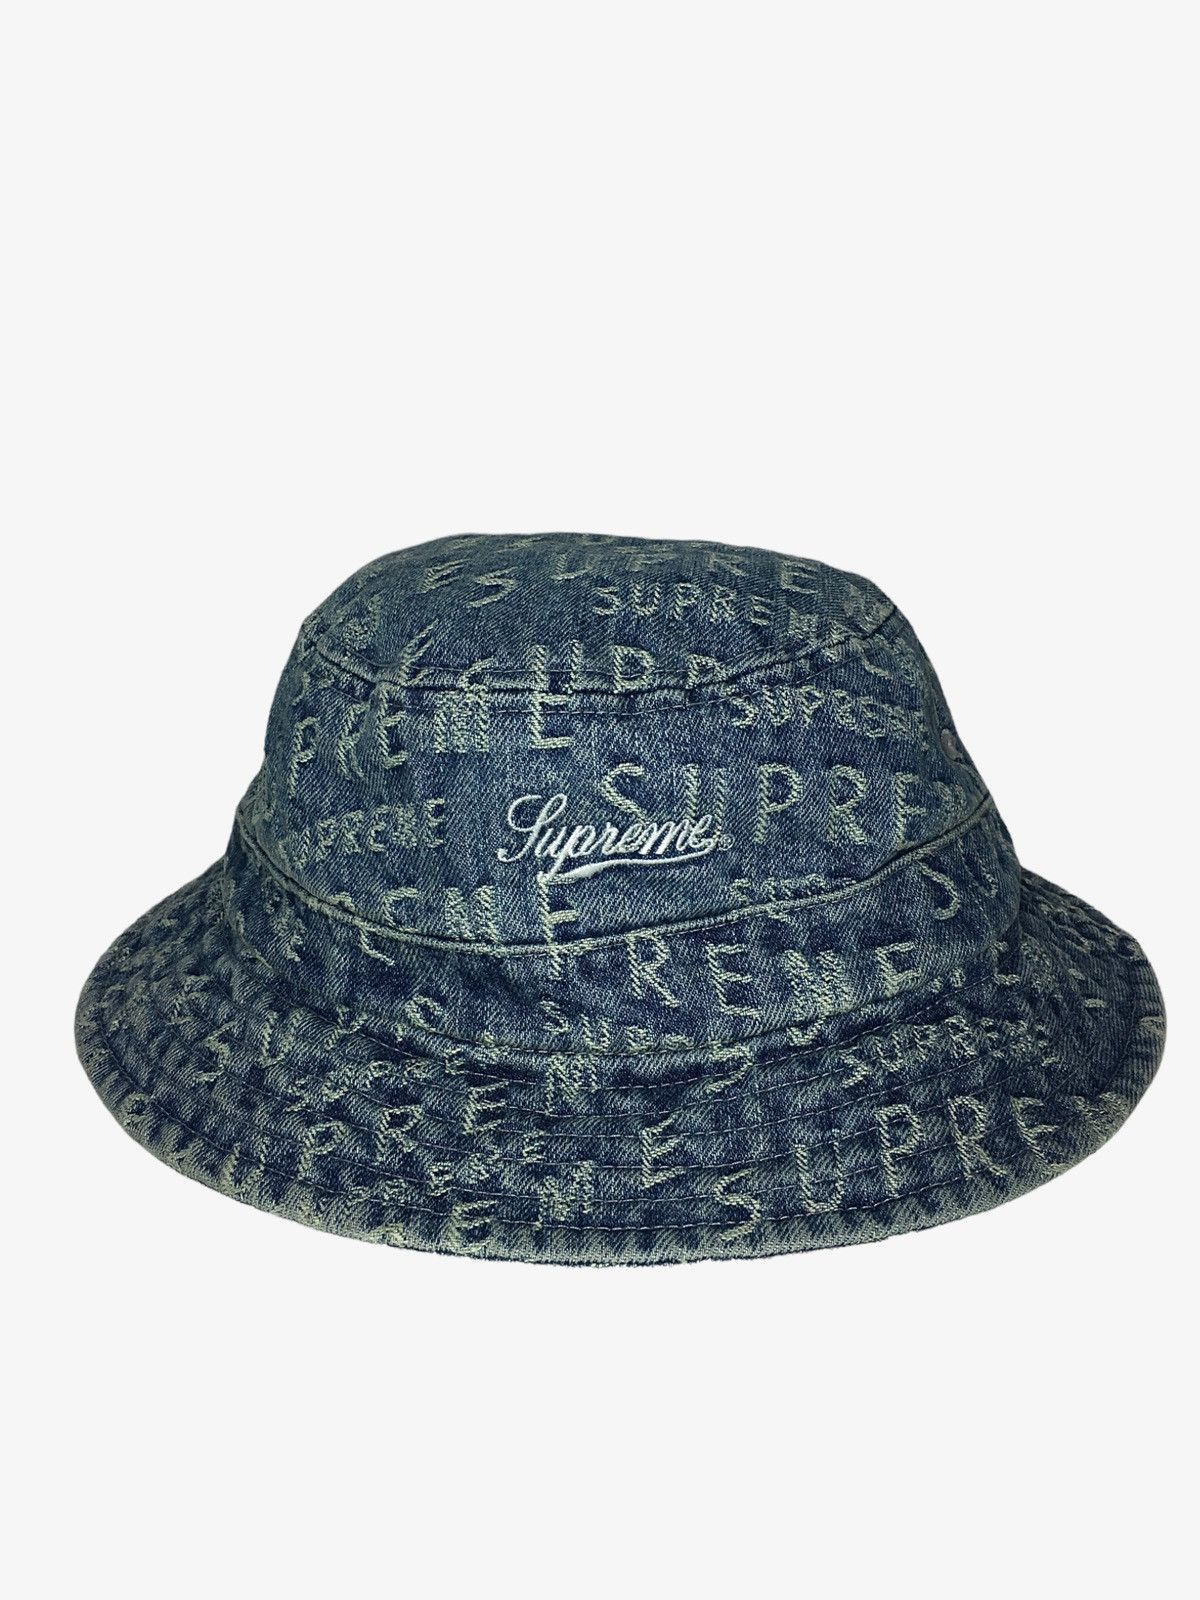 Supreme bucket hat SUPREME Warp Jacquard Denim Crusher cap skate